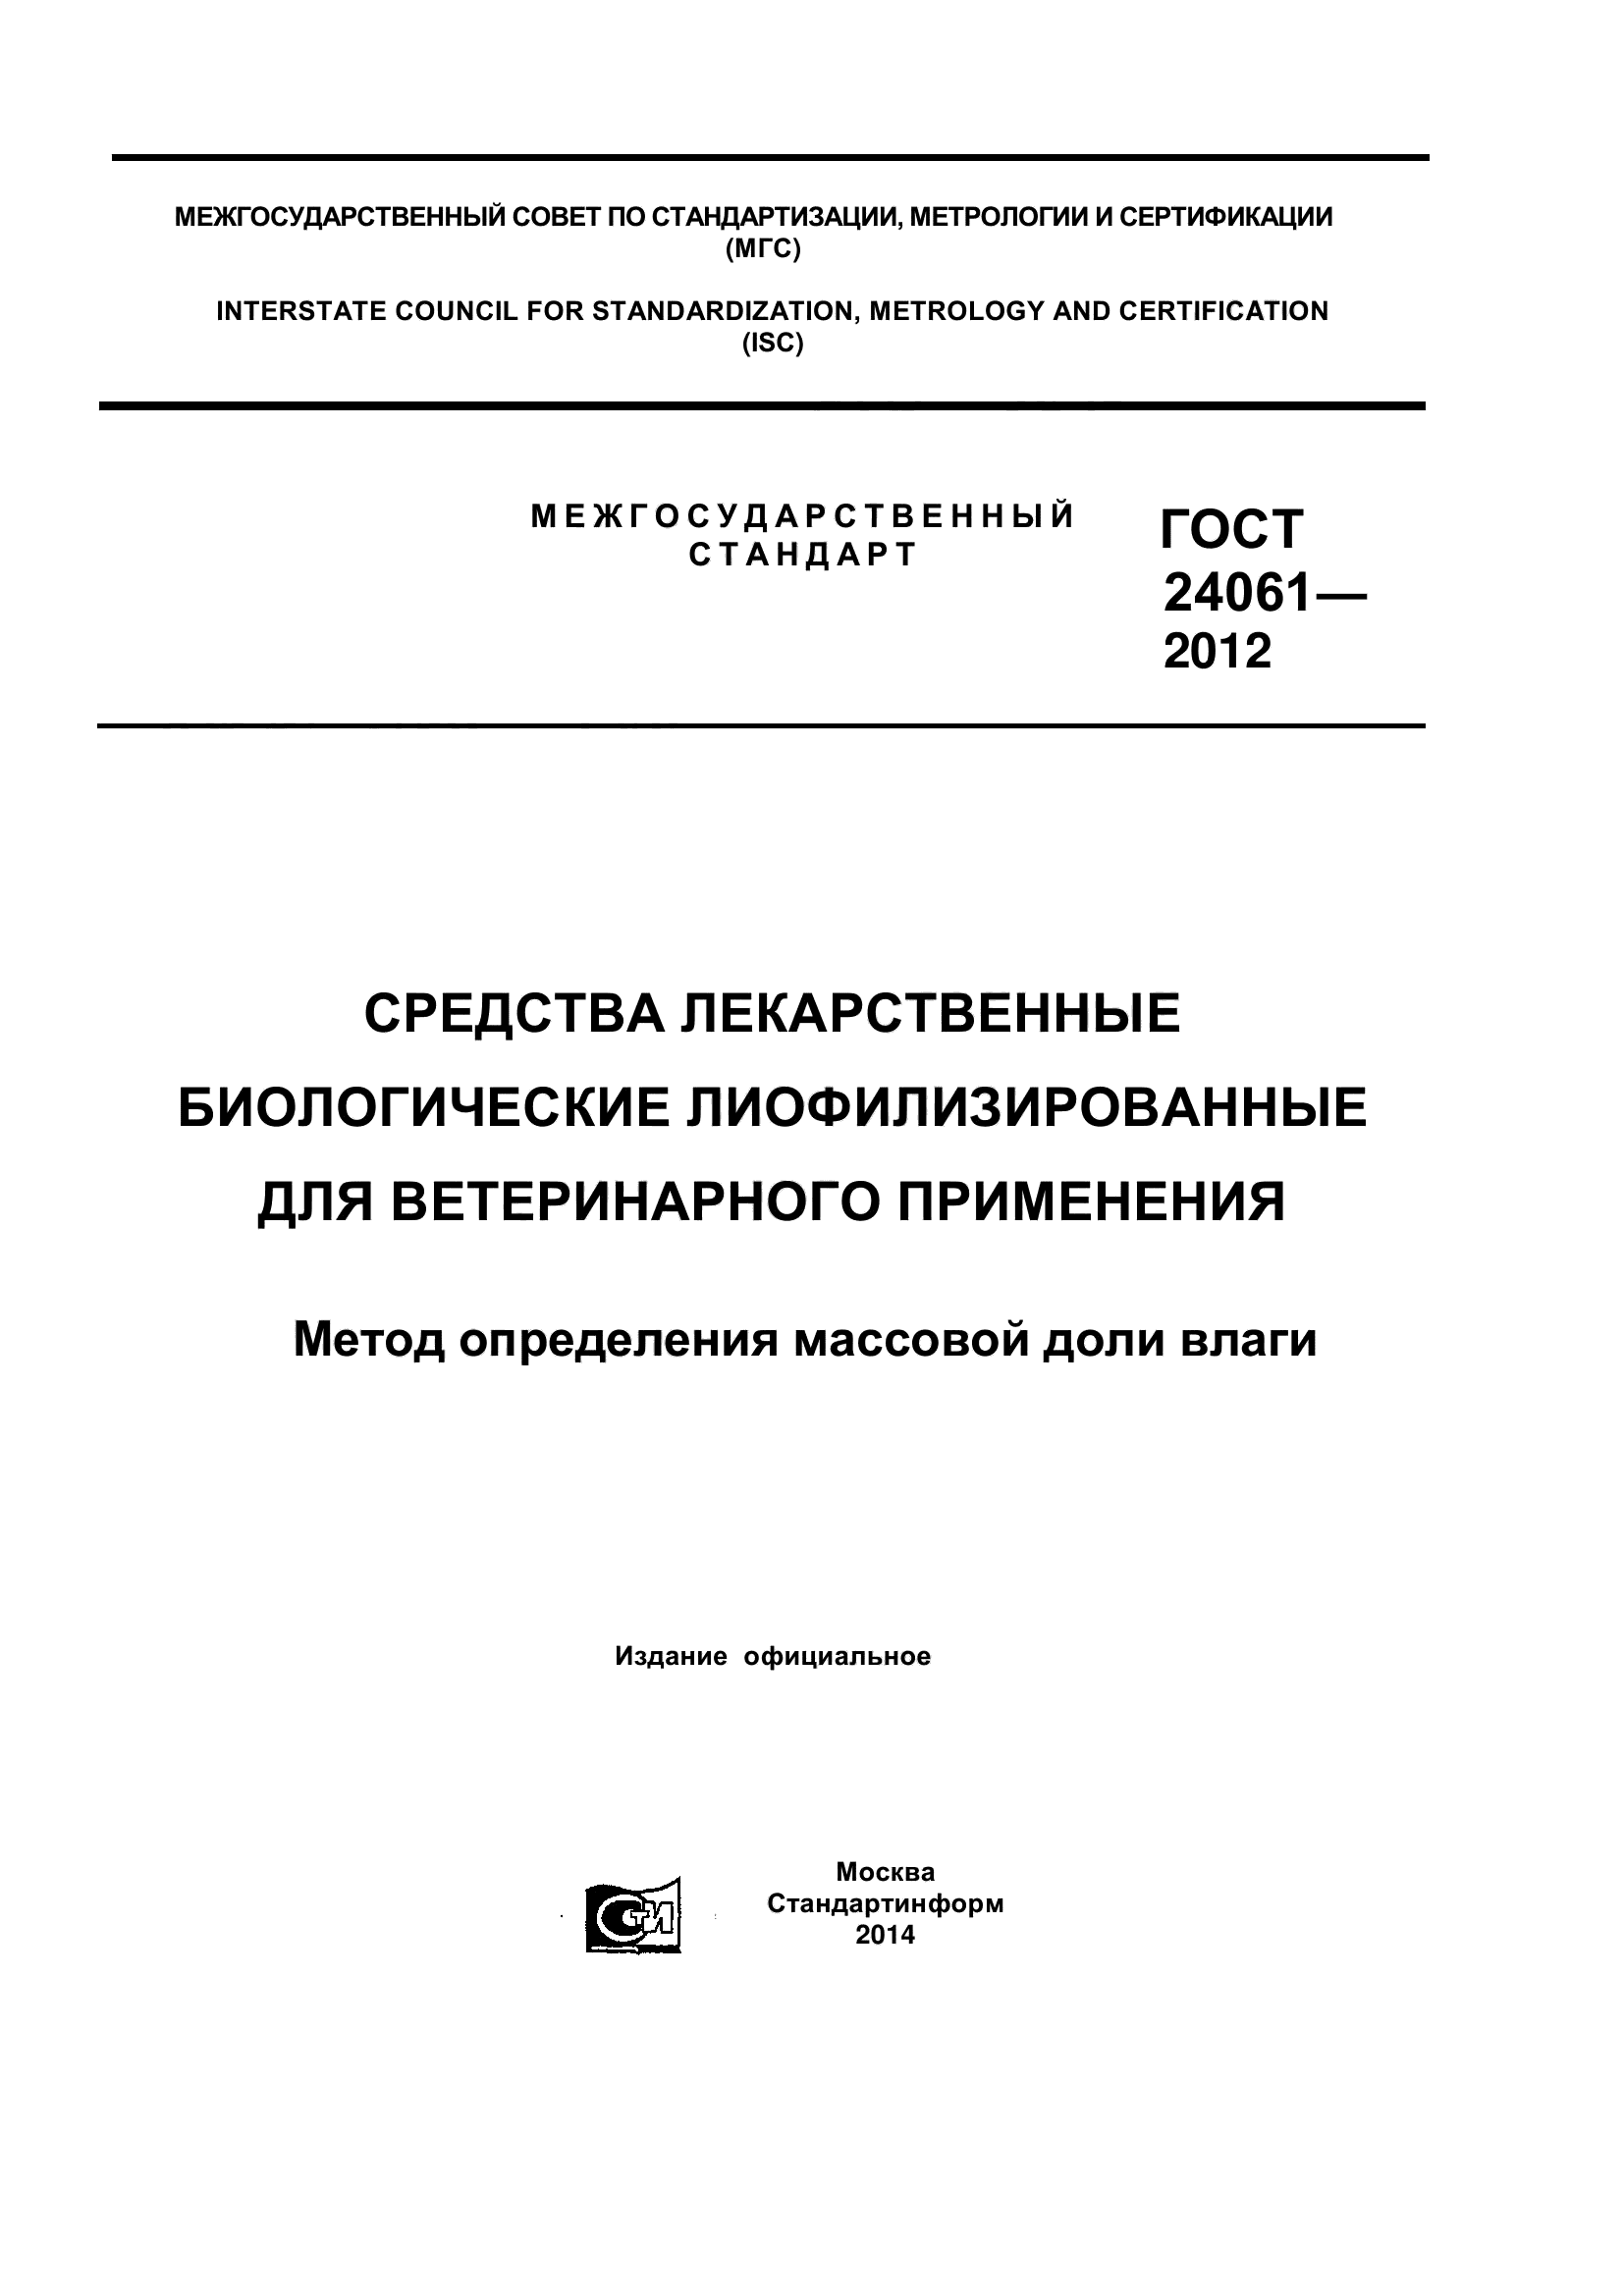 ГОСТ 24061-2012